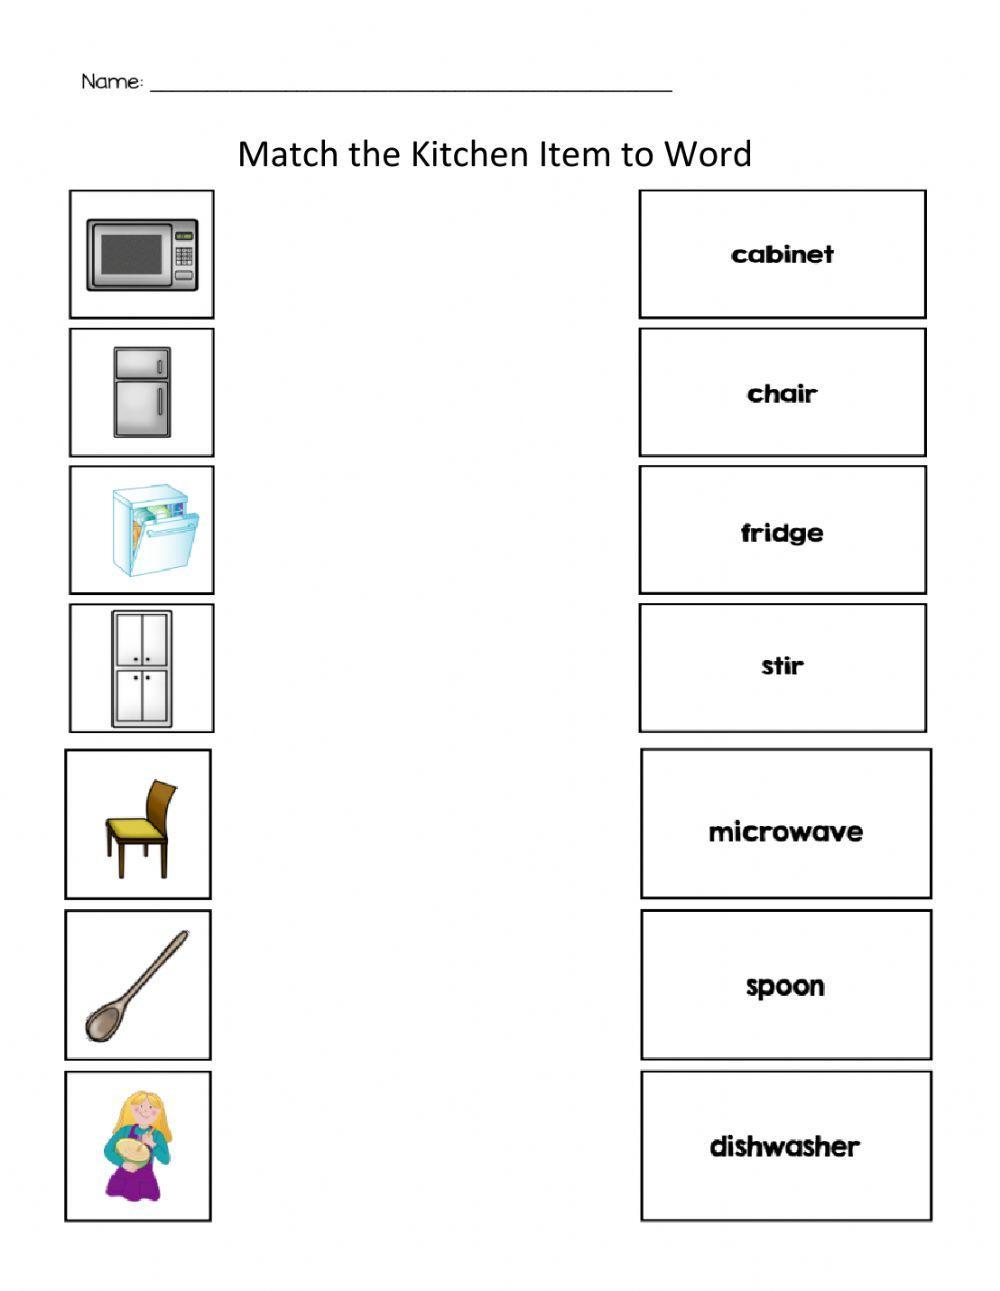 Matching Kitchen Item to Word